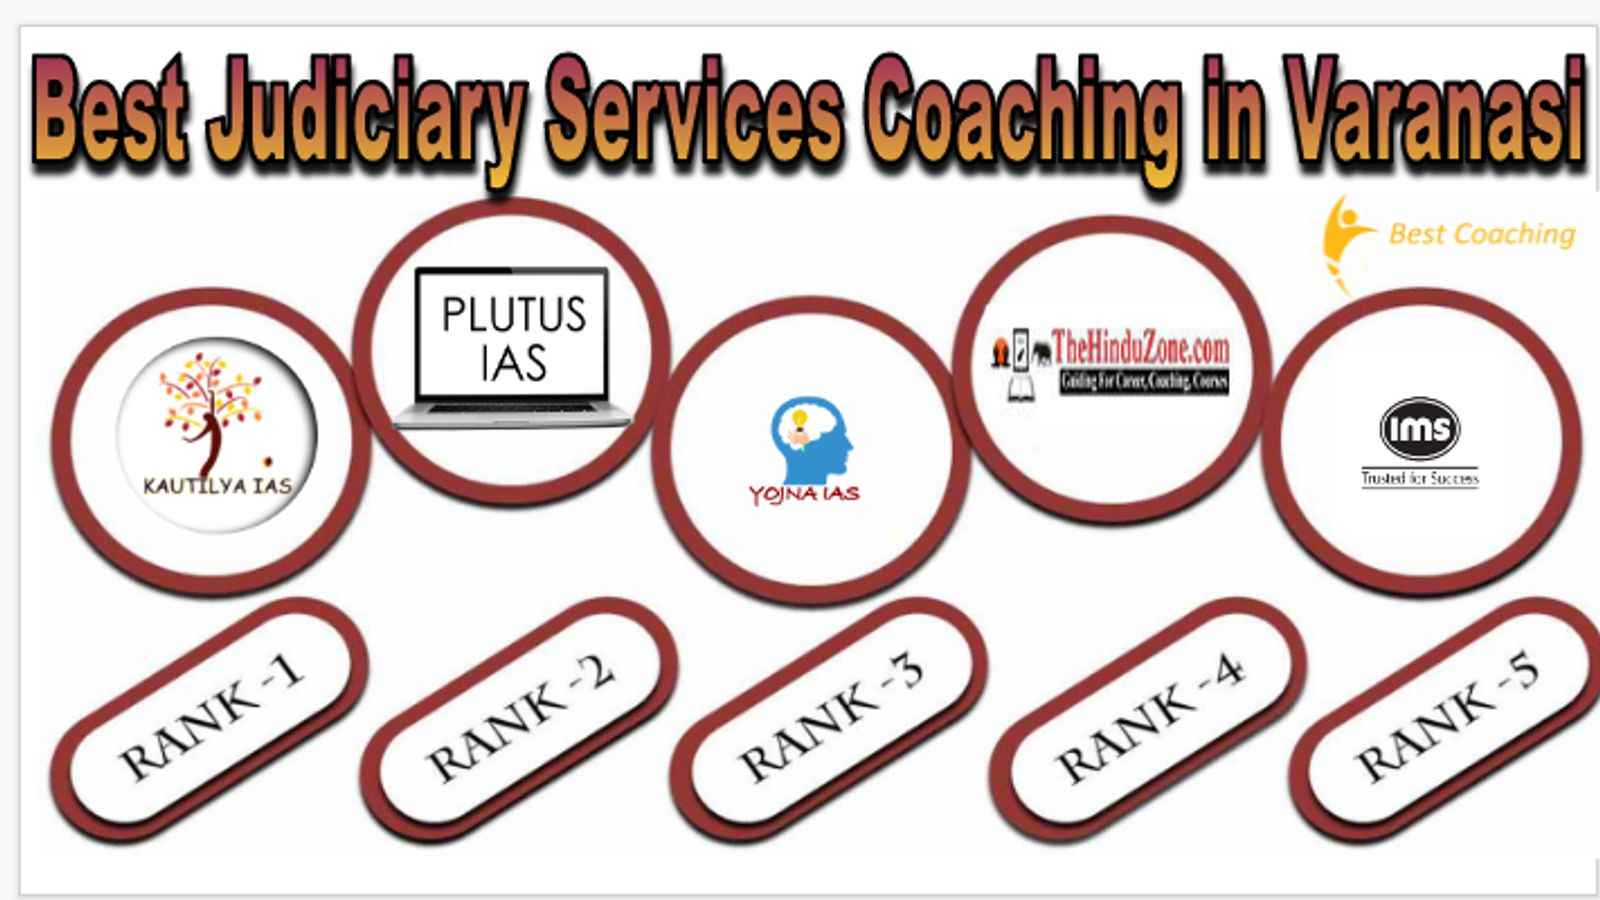 Best Judiciary Services Coaching in Varanasi